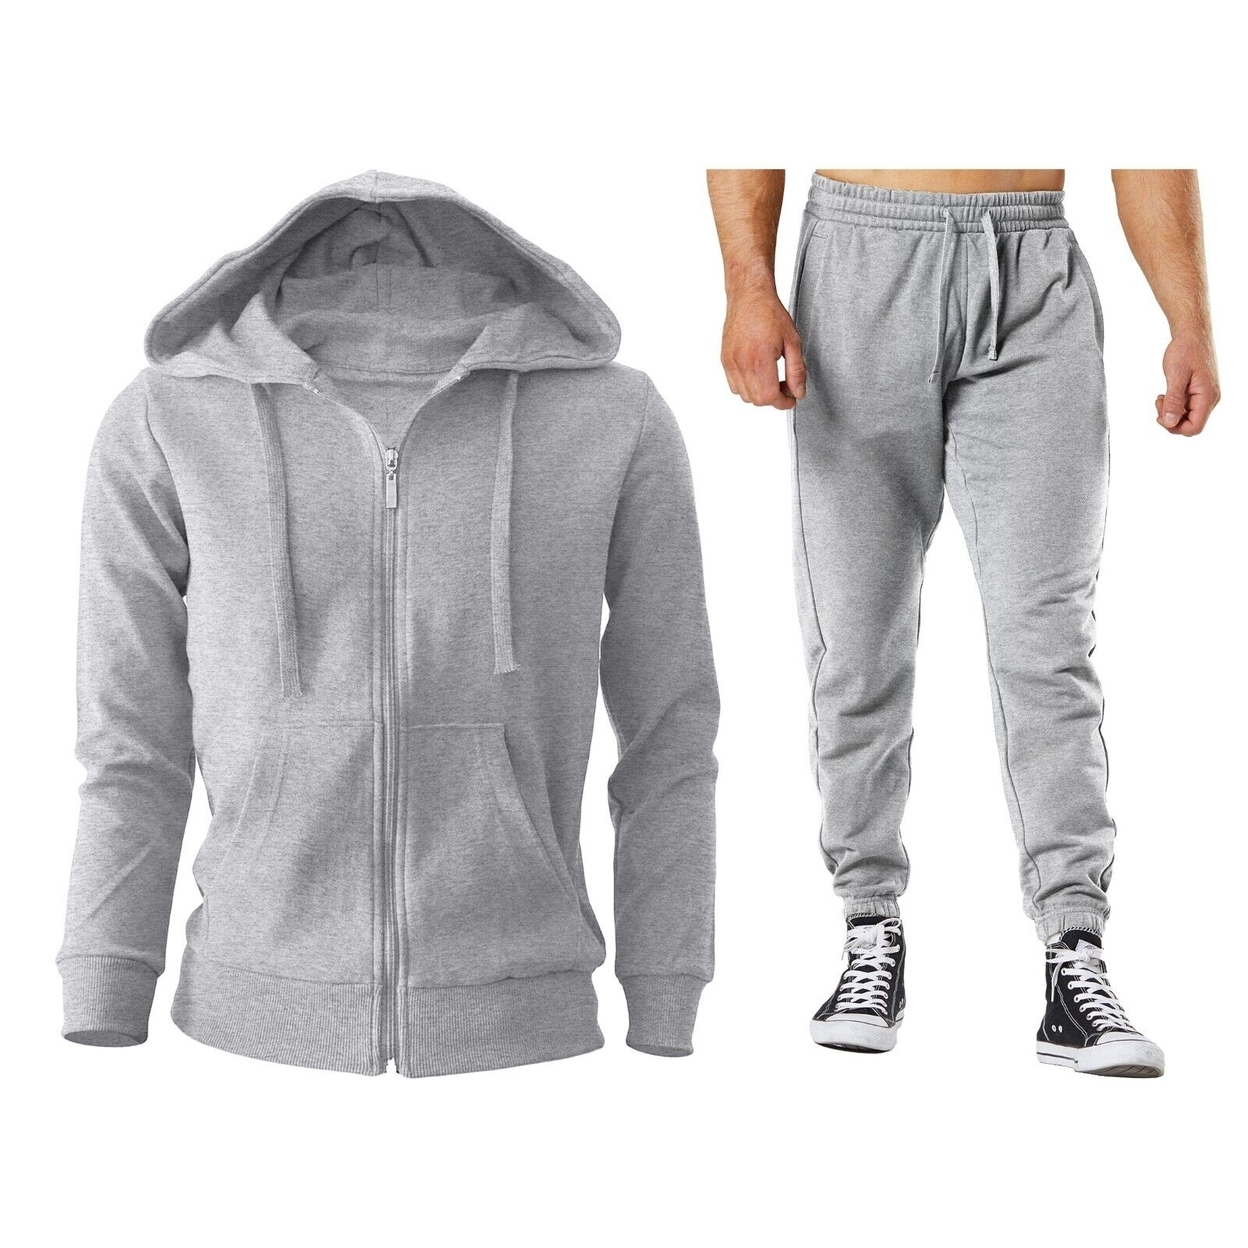 4-Piece: Men's Winter Warm Cozy Athletic Multi-Pockets BIG & TALL Sweatsuit Set - Grey, Medium